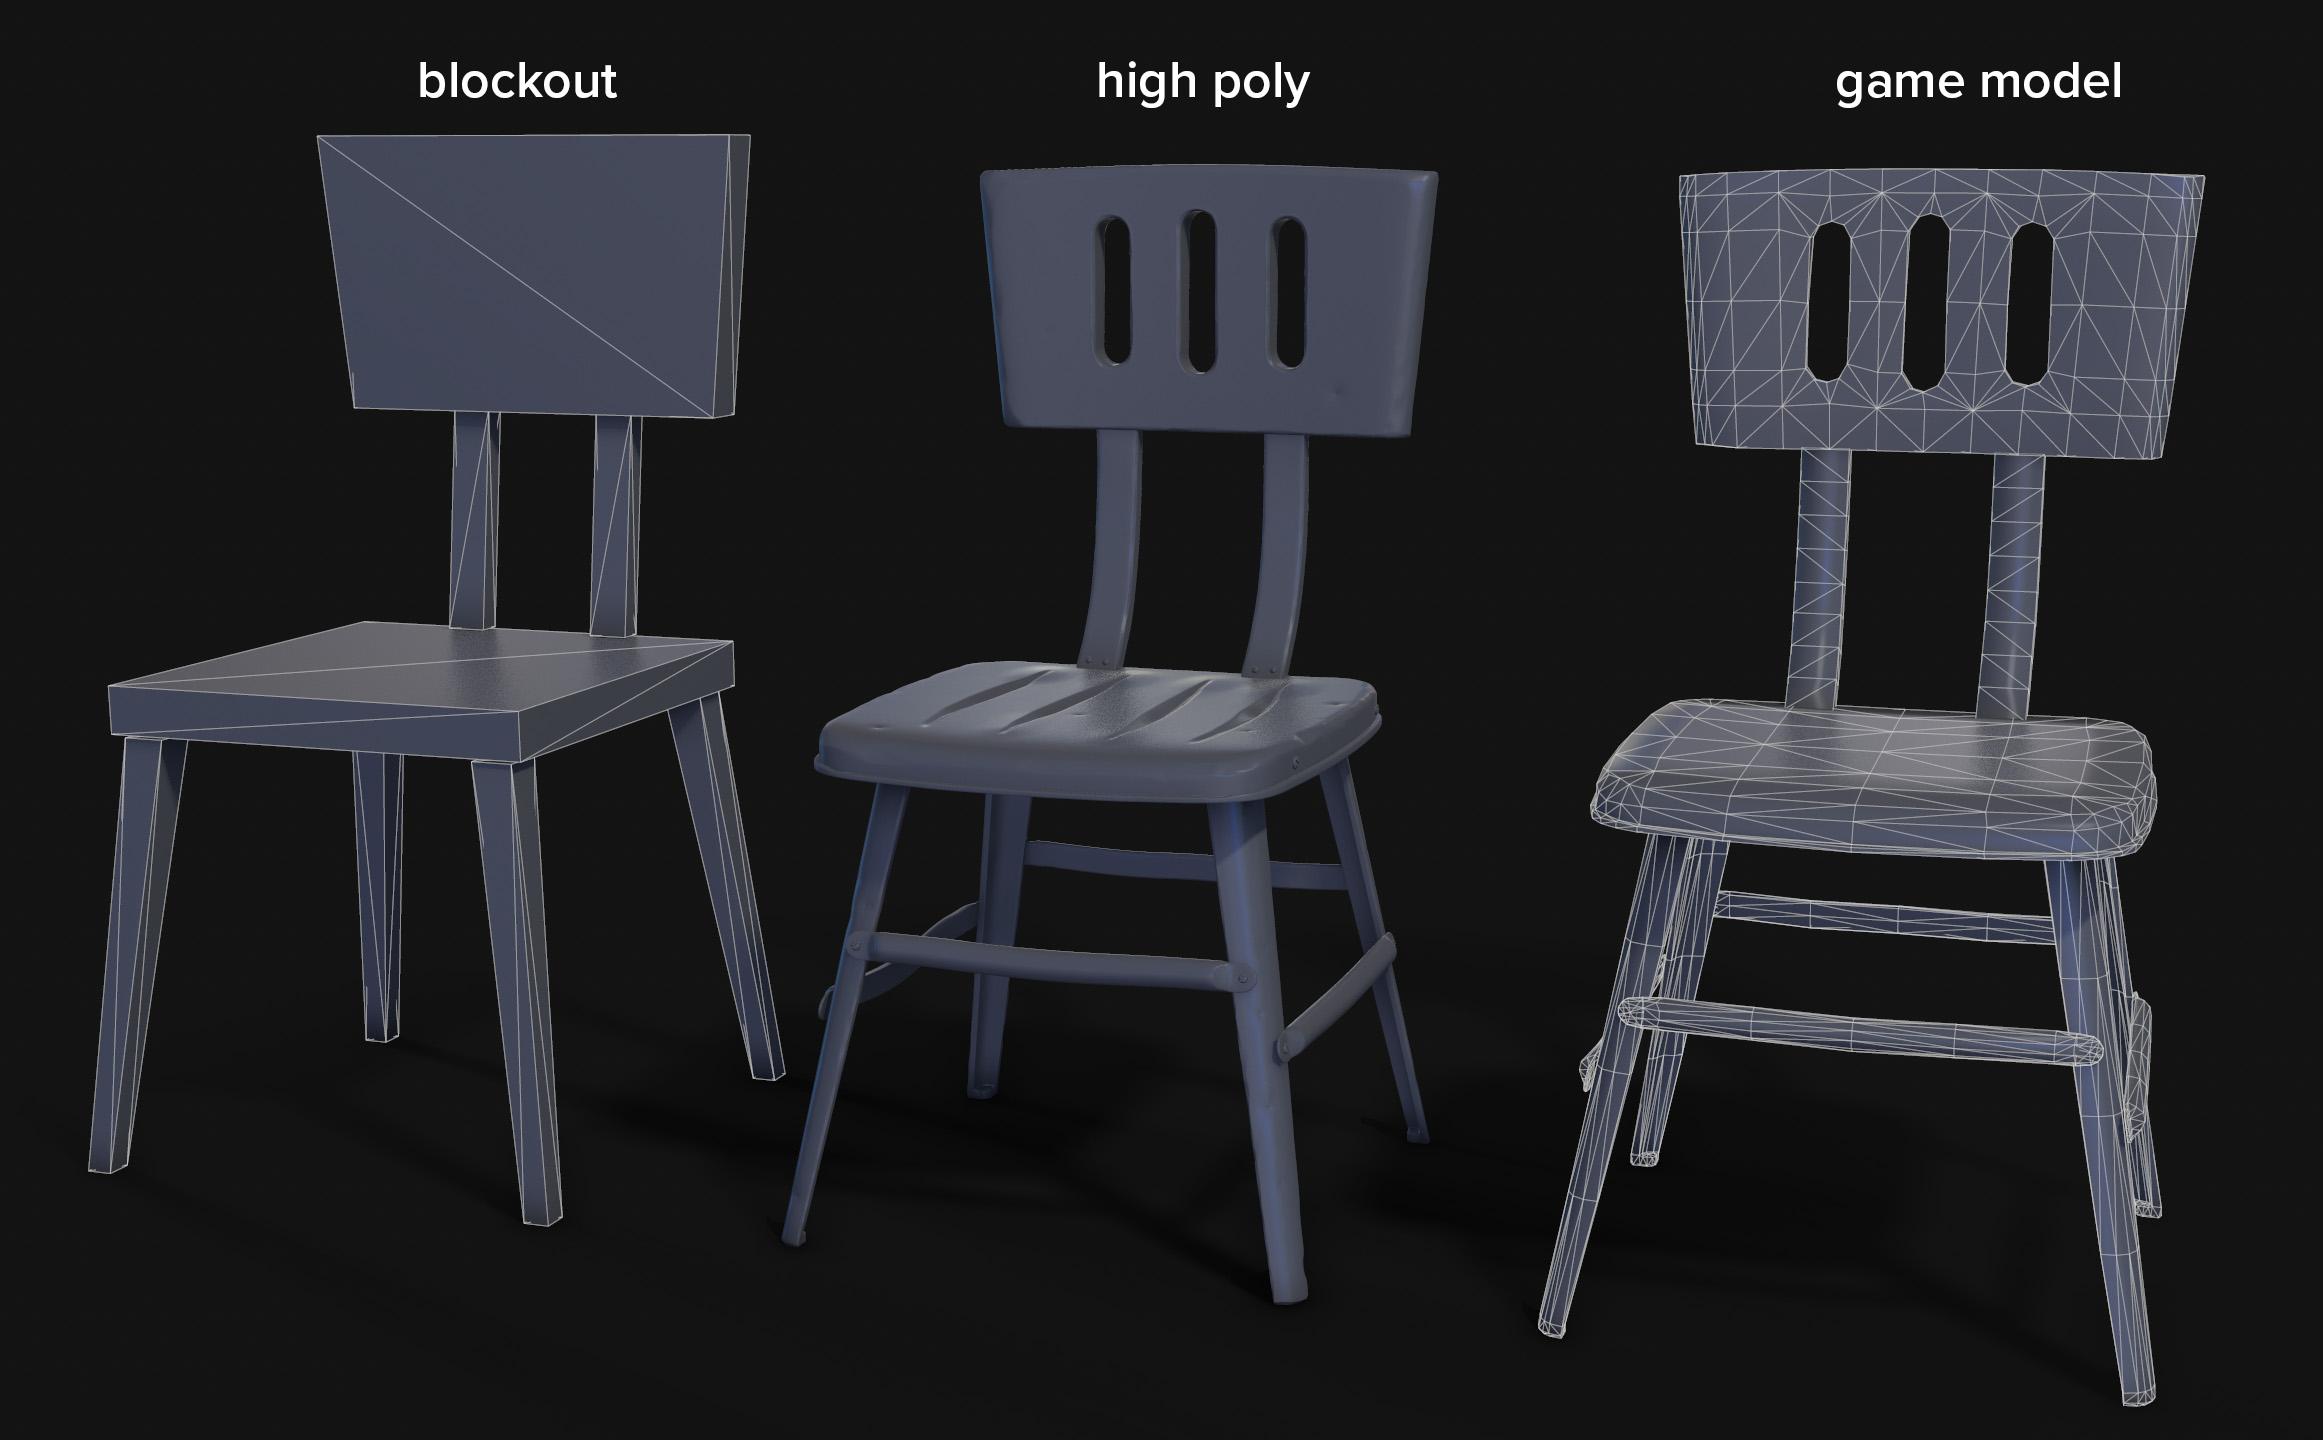 Breakdown of modeling of chair